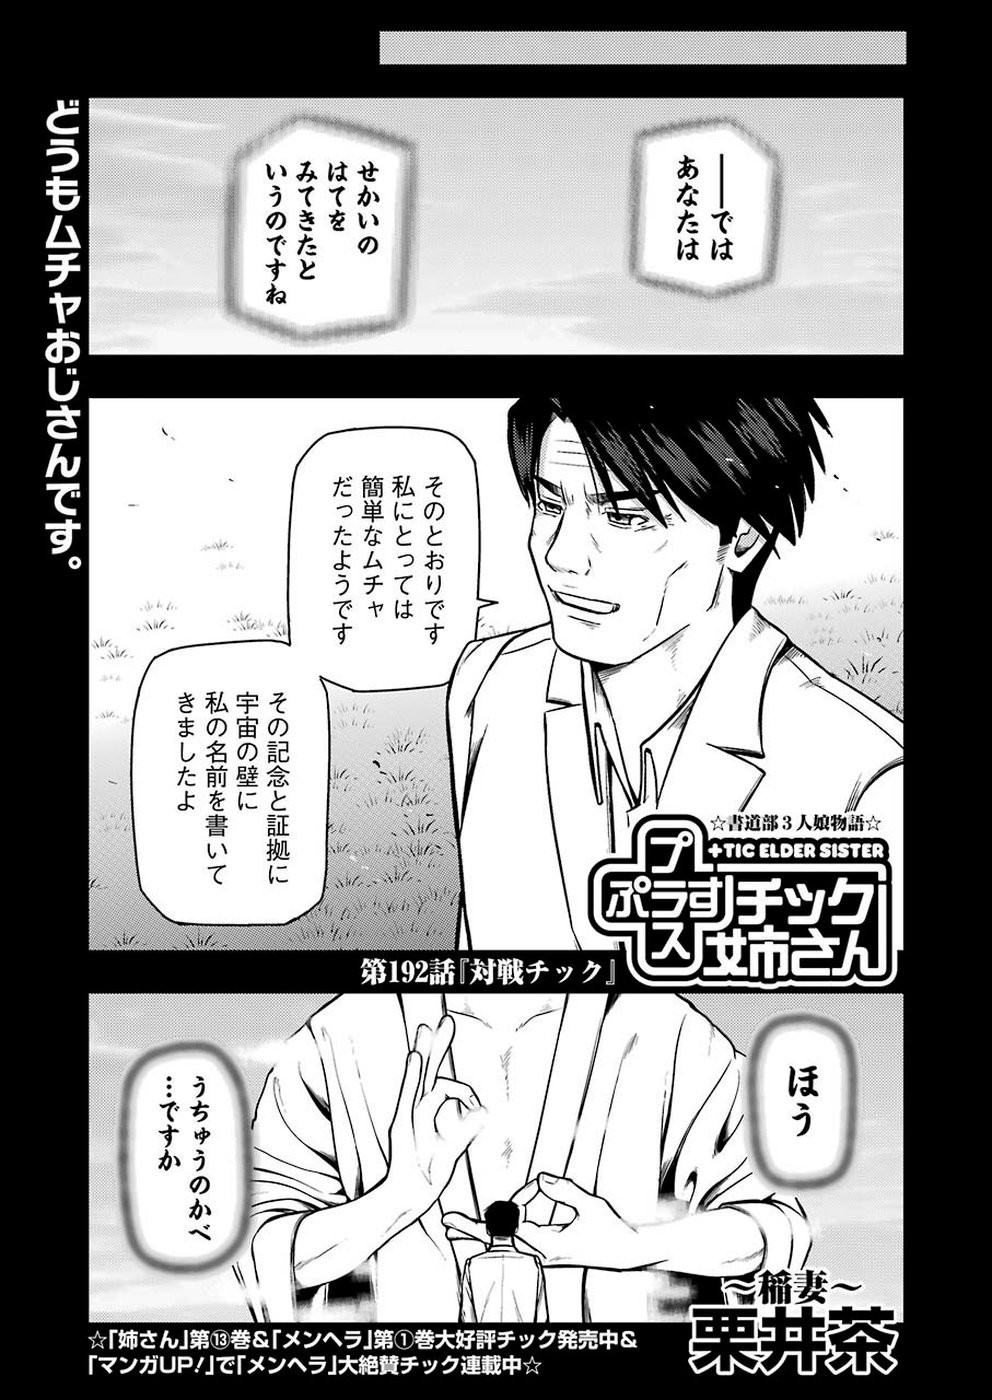 Tic Nee San Chapter 192 Page 1 Raw Manga 生漫画